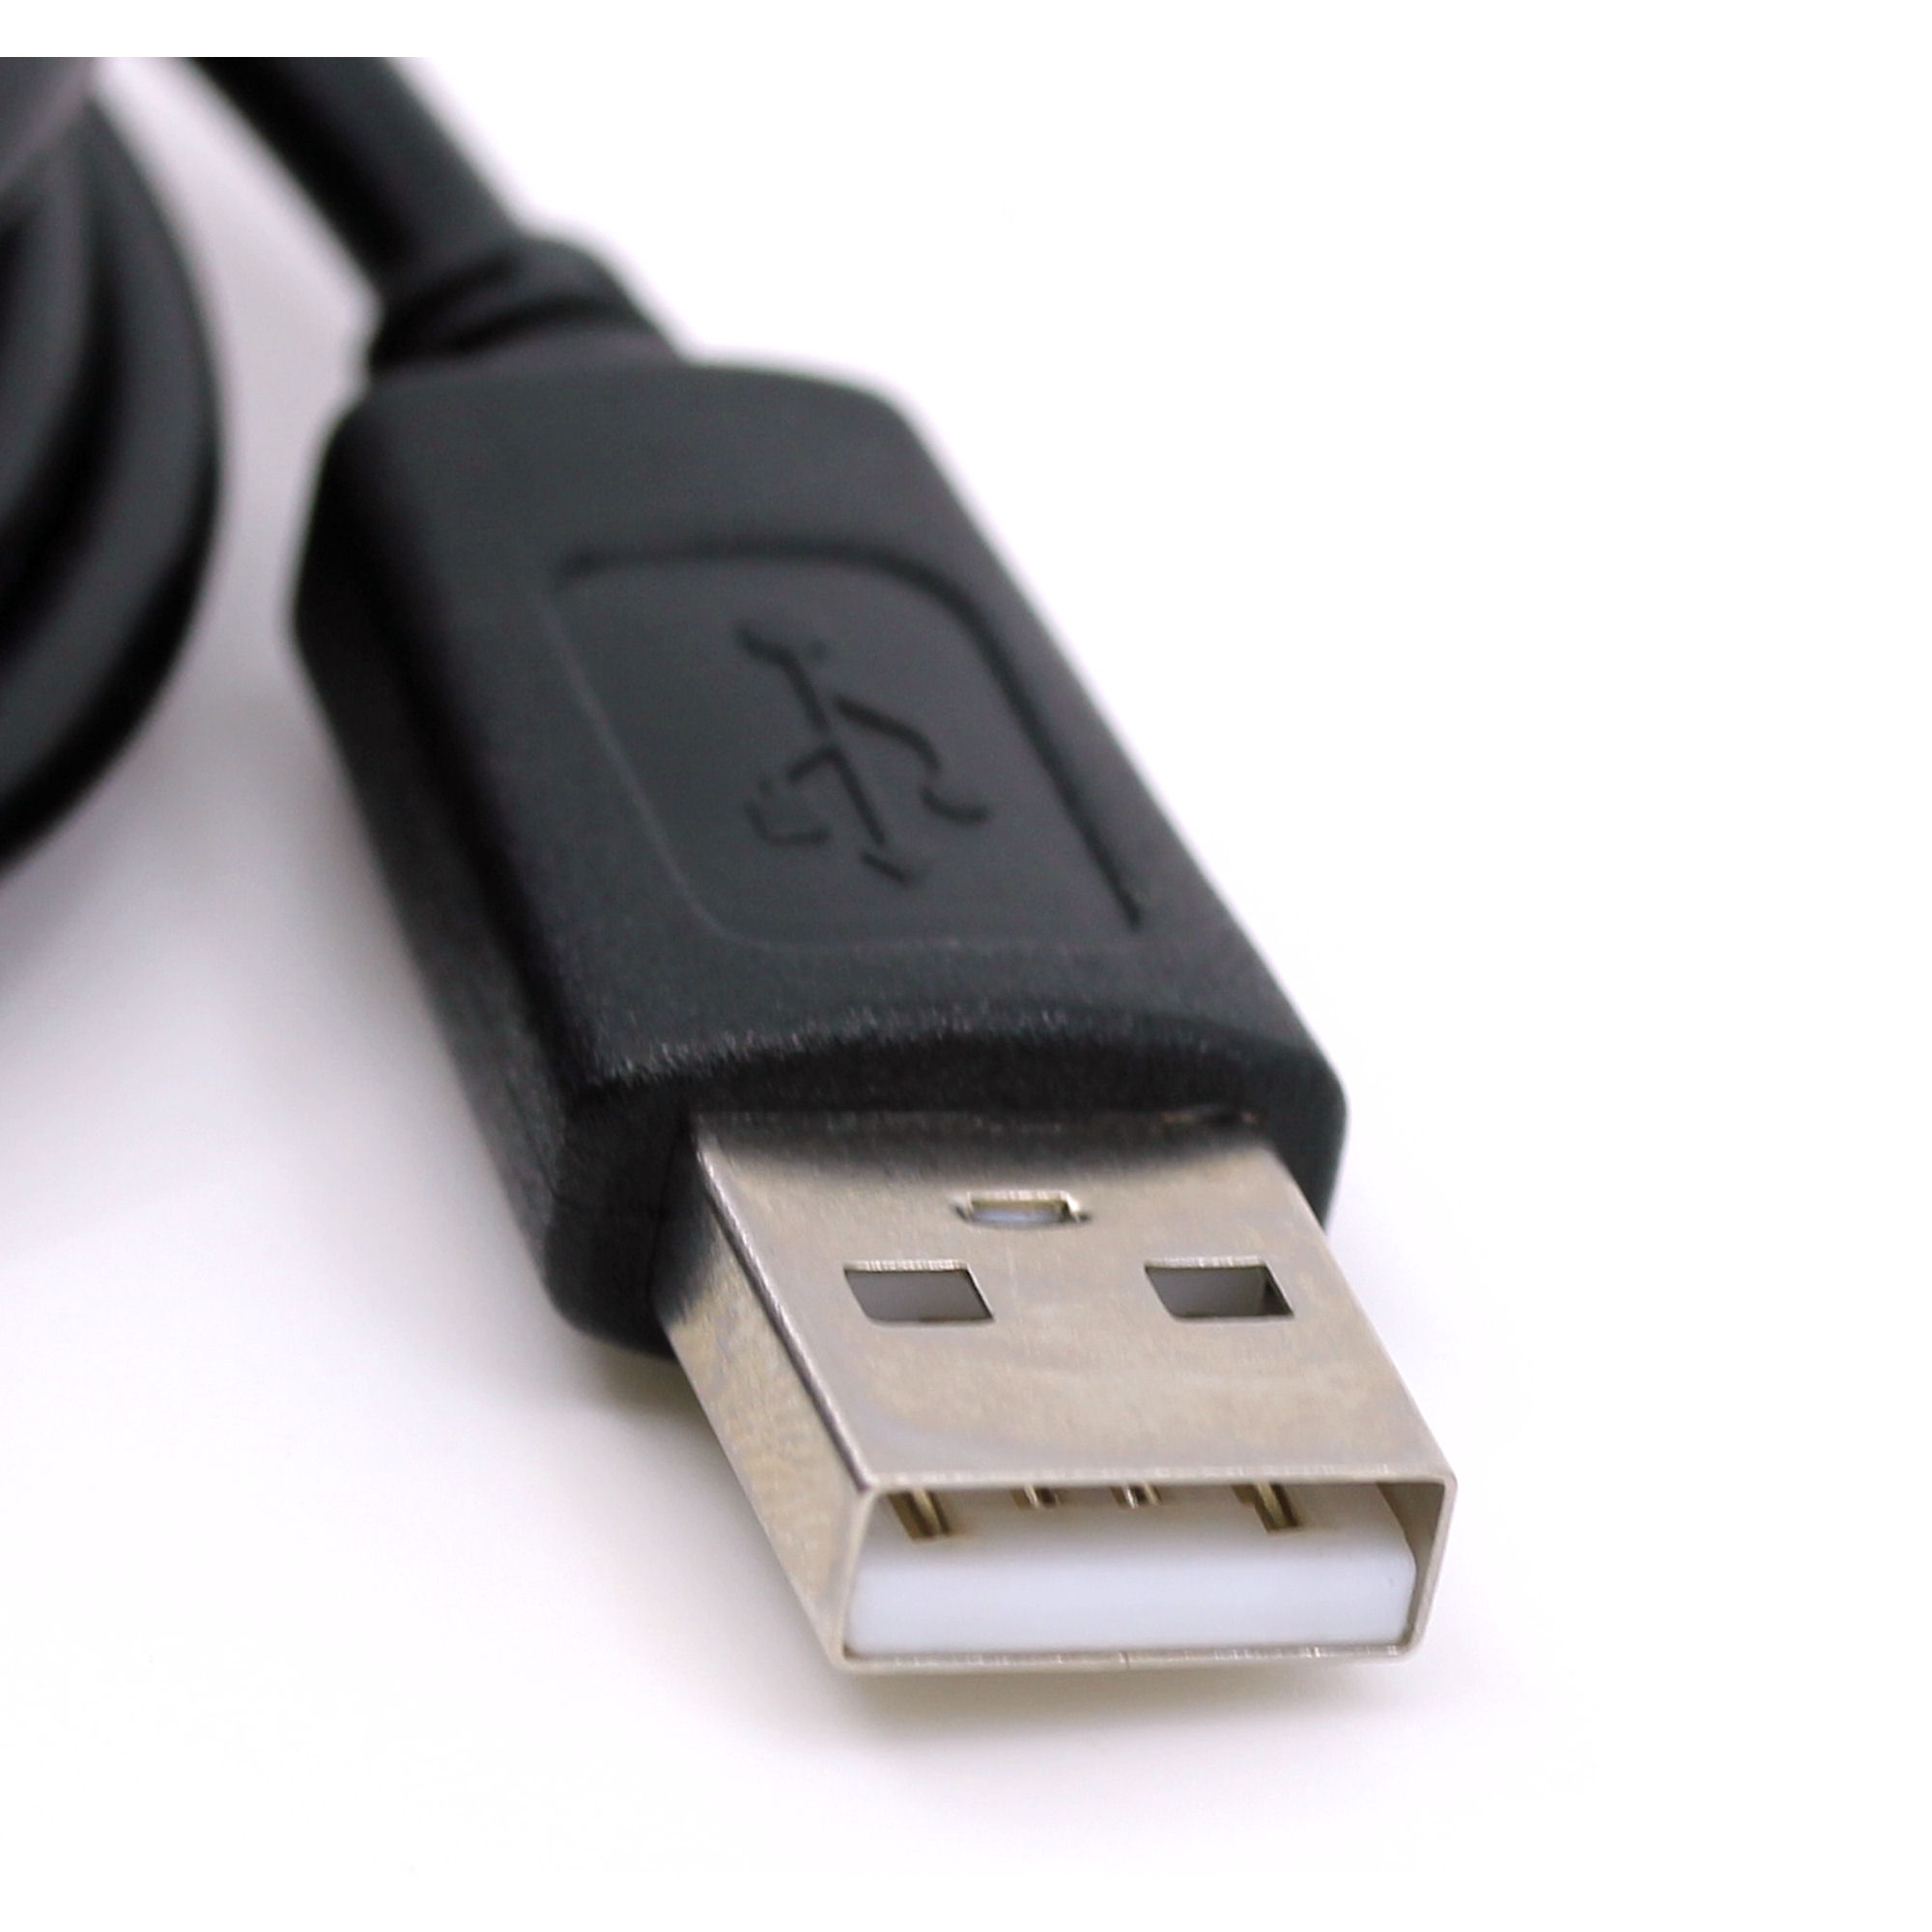 USB Datenkabel für Ravensburger TipToi, Tiptoi Create, Tiptoi 2. Generation